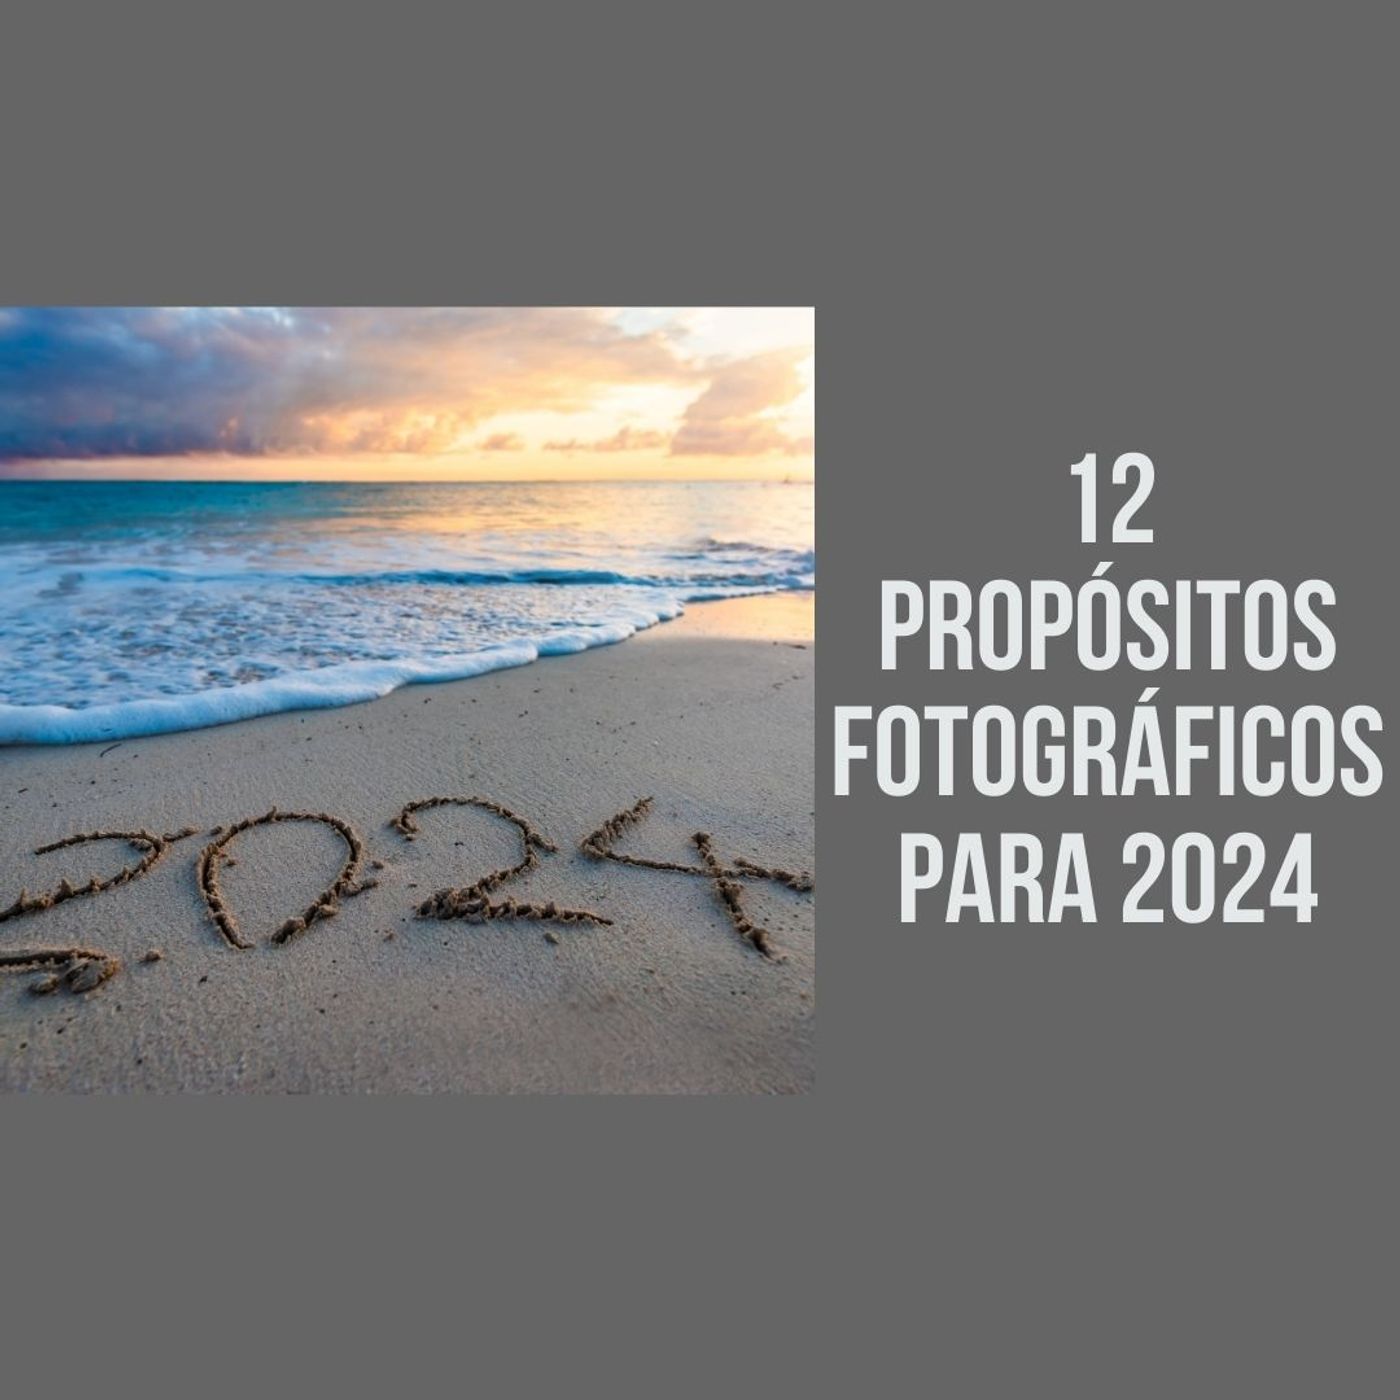 12 propósitos fotográficos para 2024